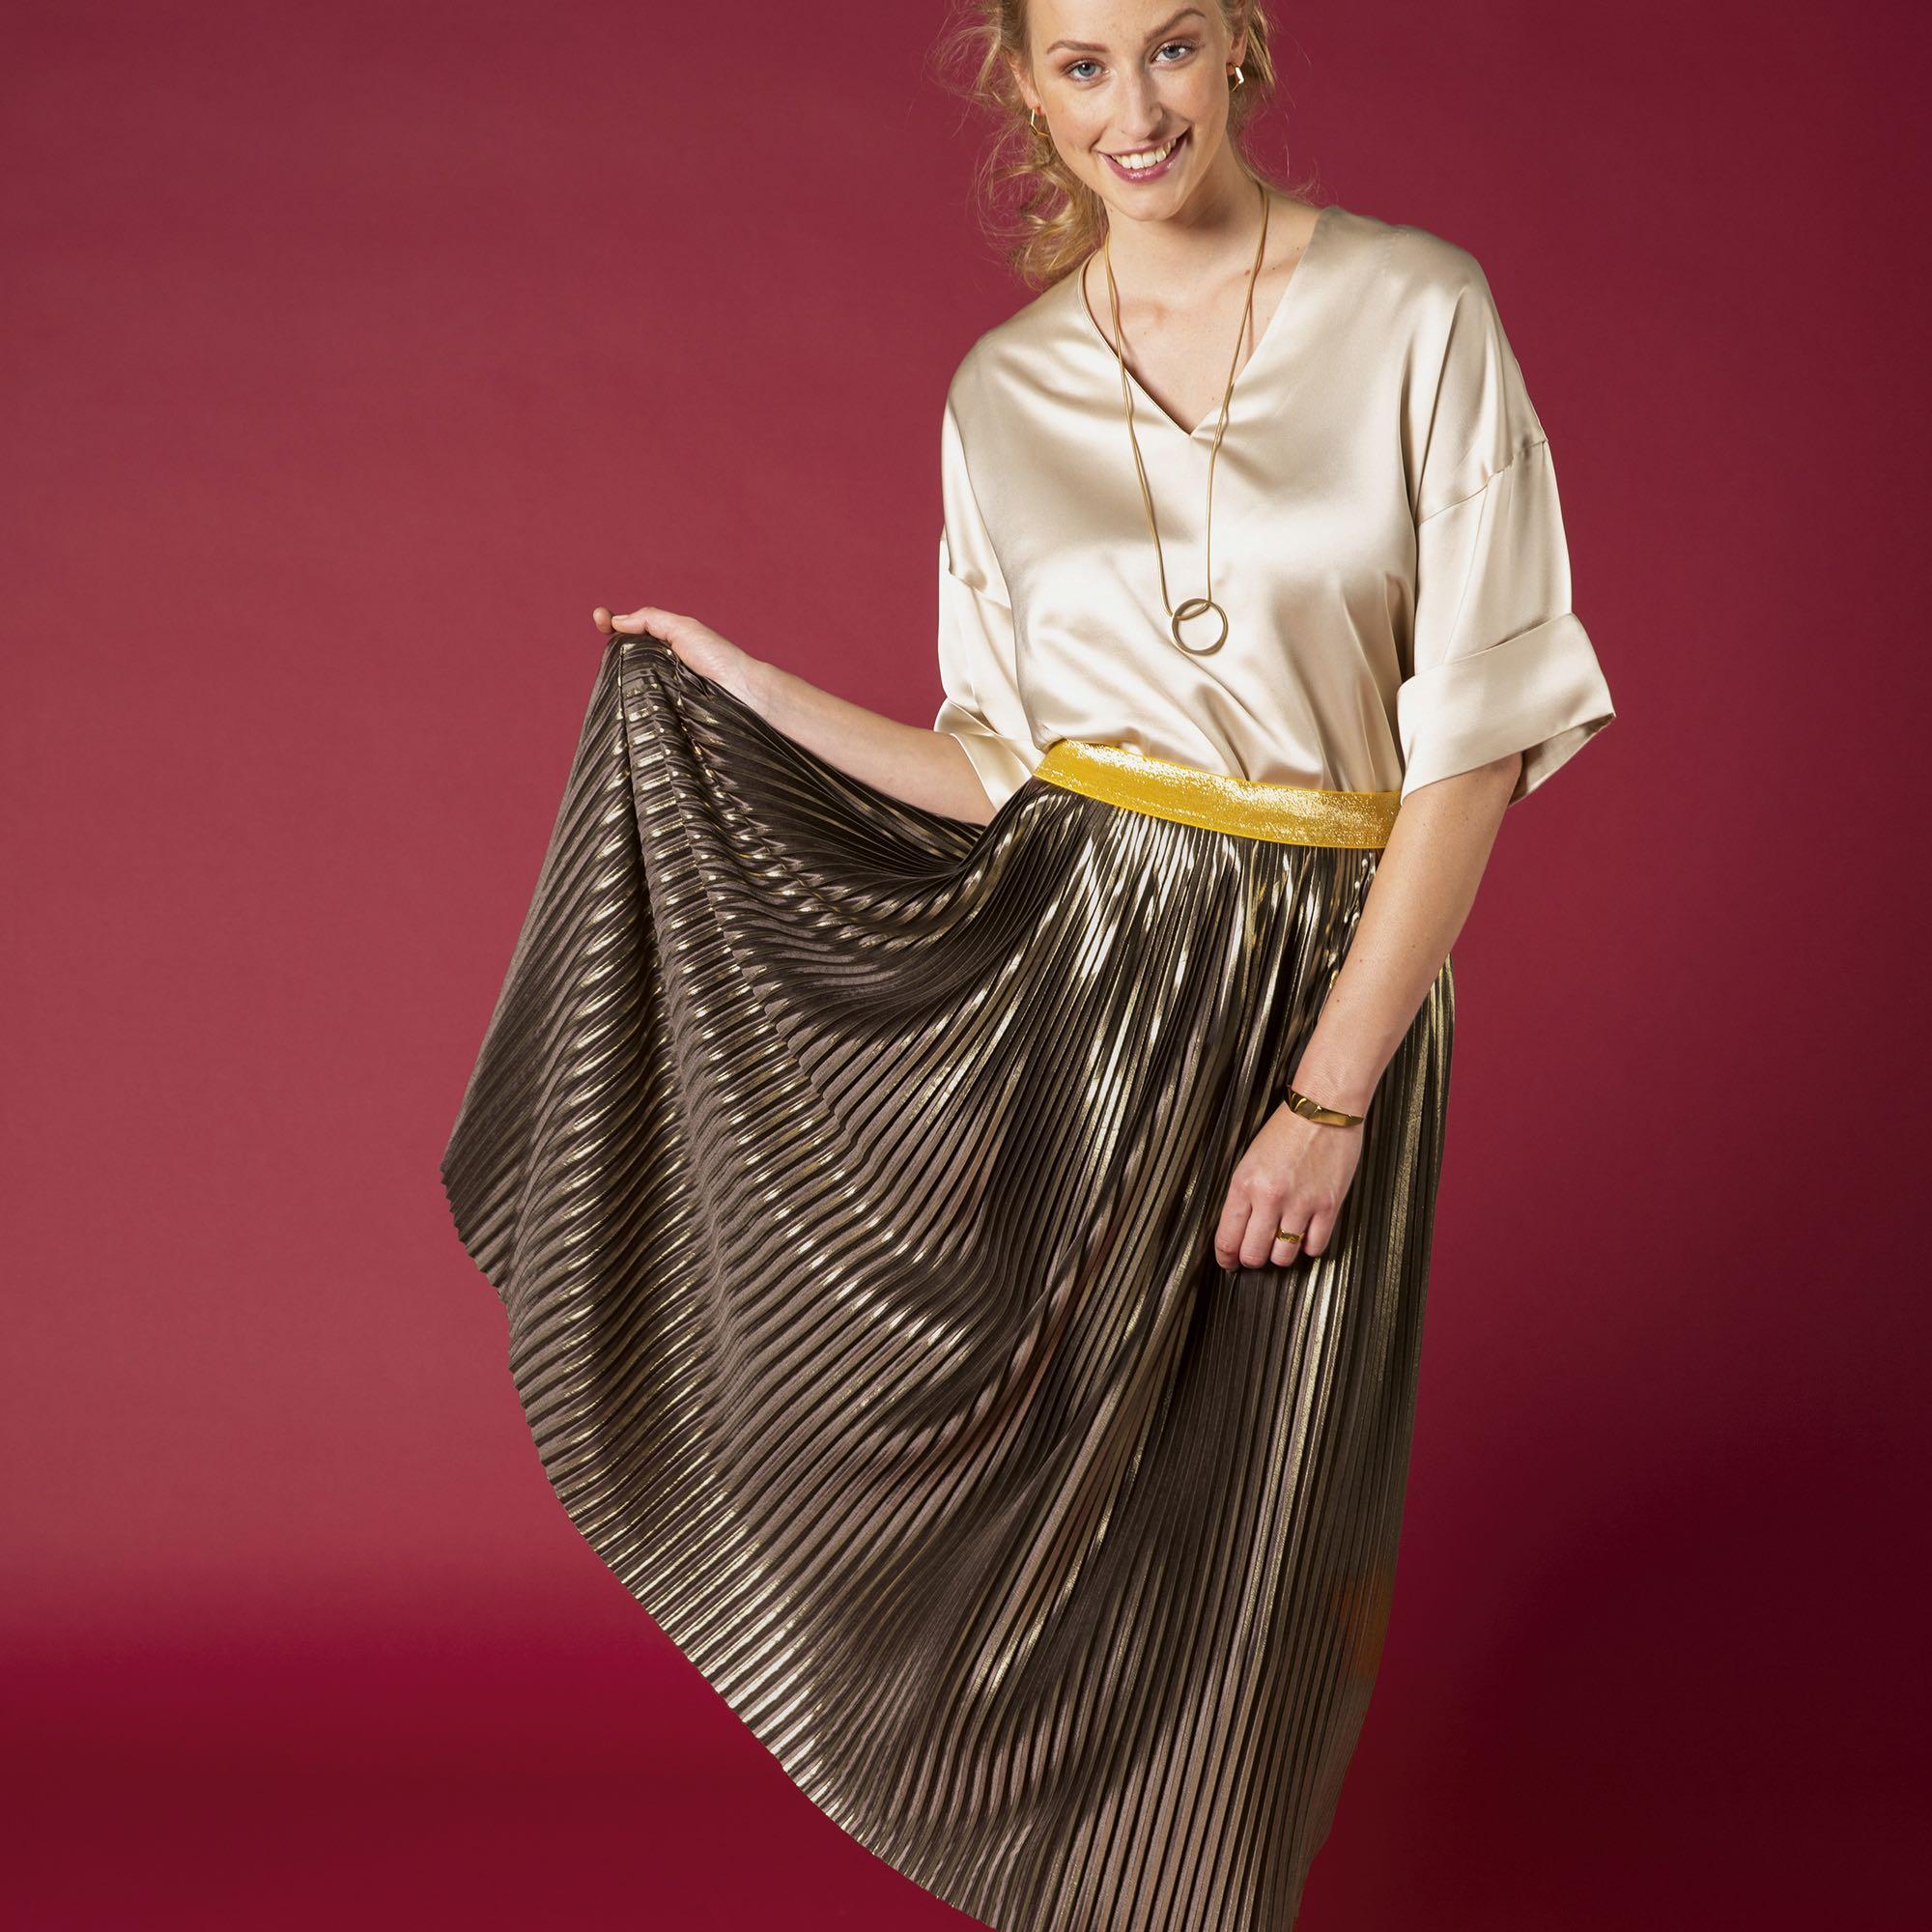 Allegra Skirt Sewing Pattern For Women